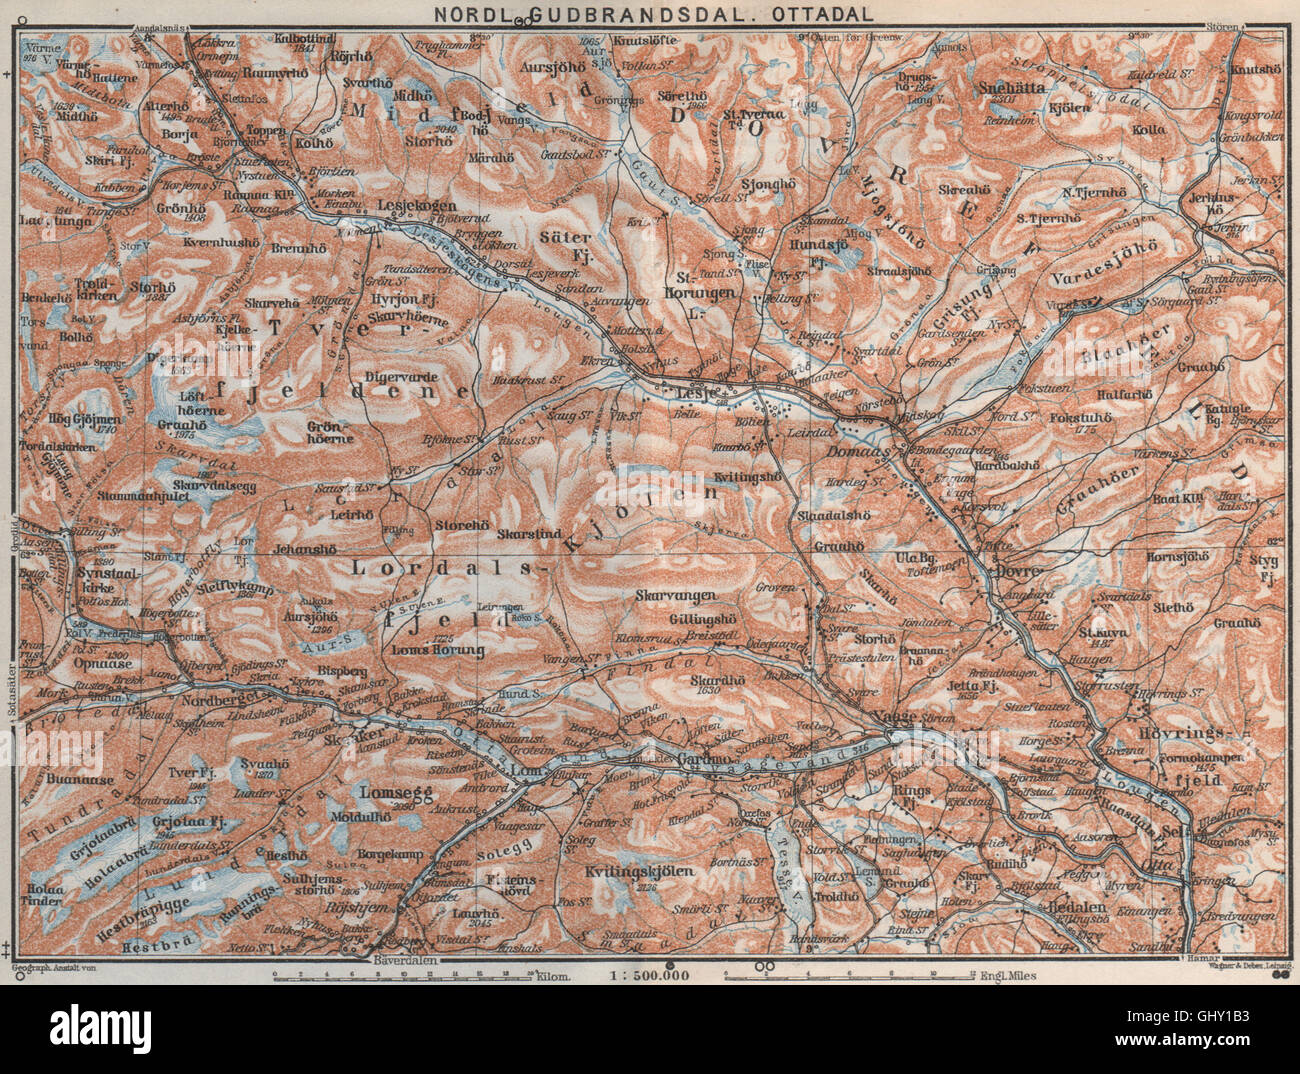 Nord GUDBRANDSDAL, OTTADAL Nordl. Dombas Dovrefjell. Topo-map. Norvegia, 1909 Foto Stock